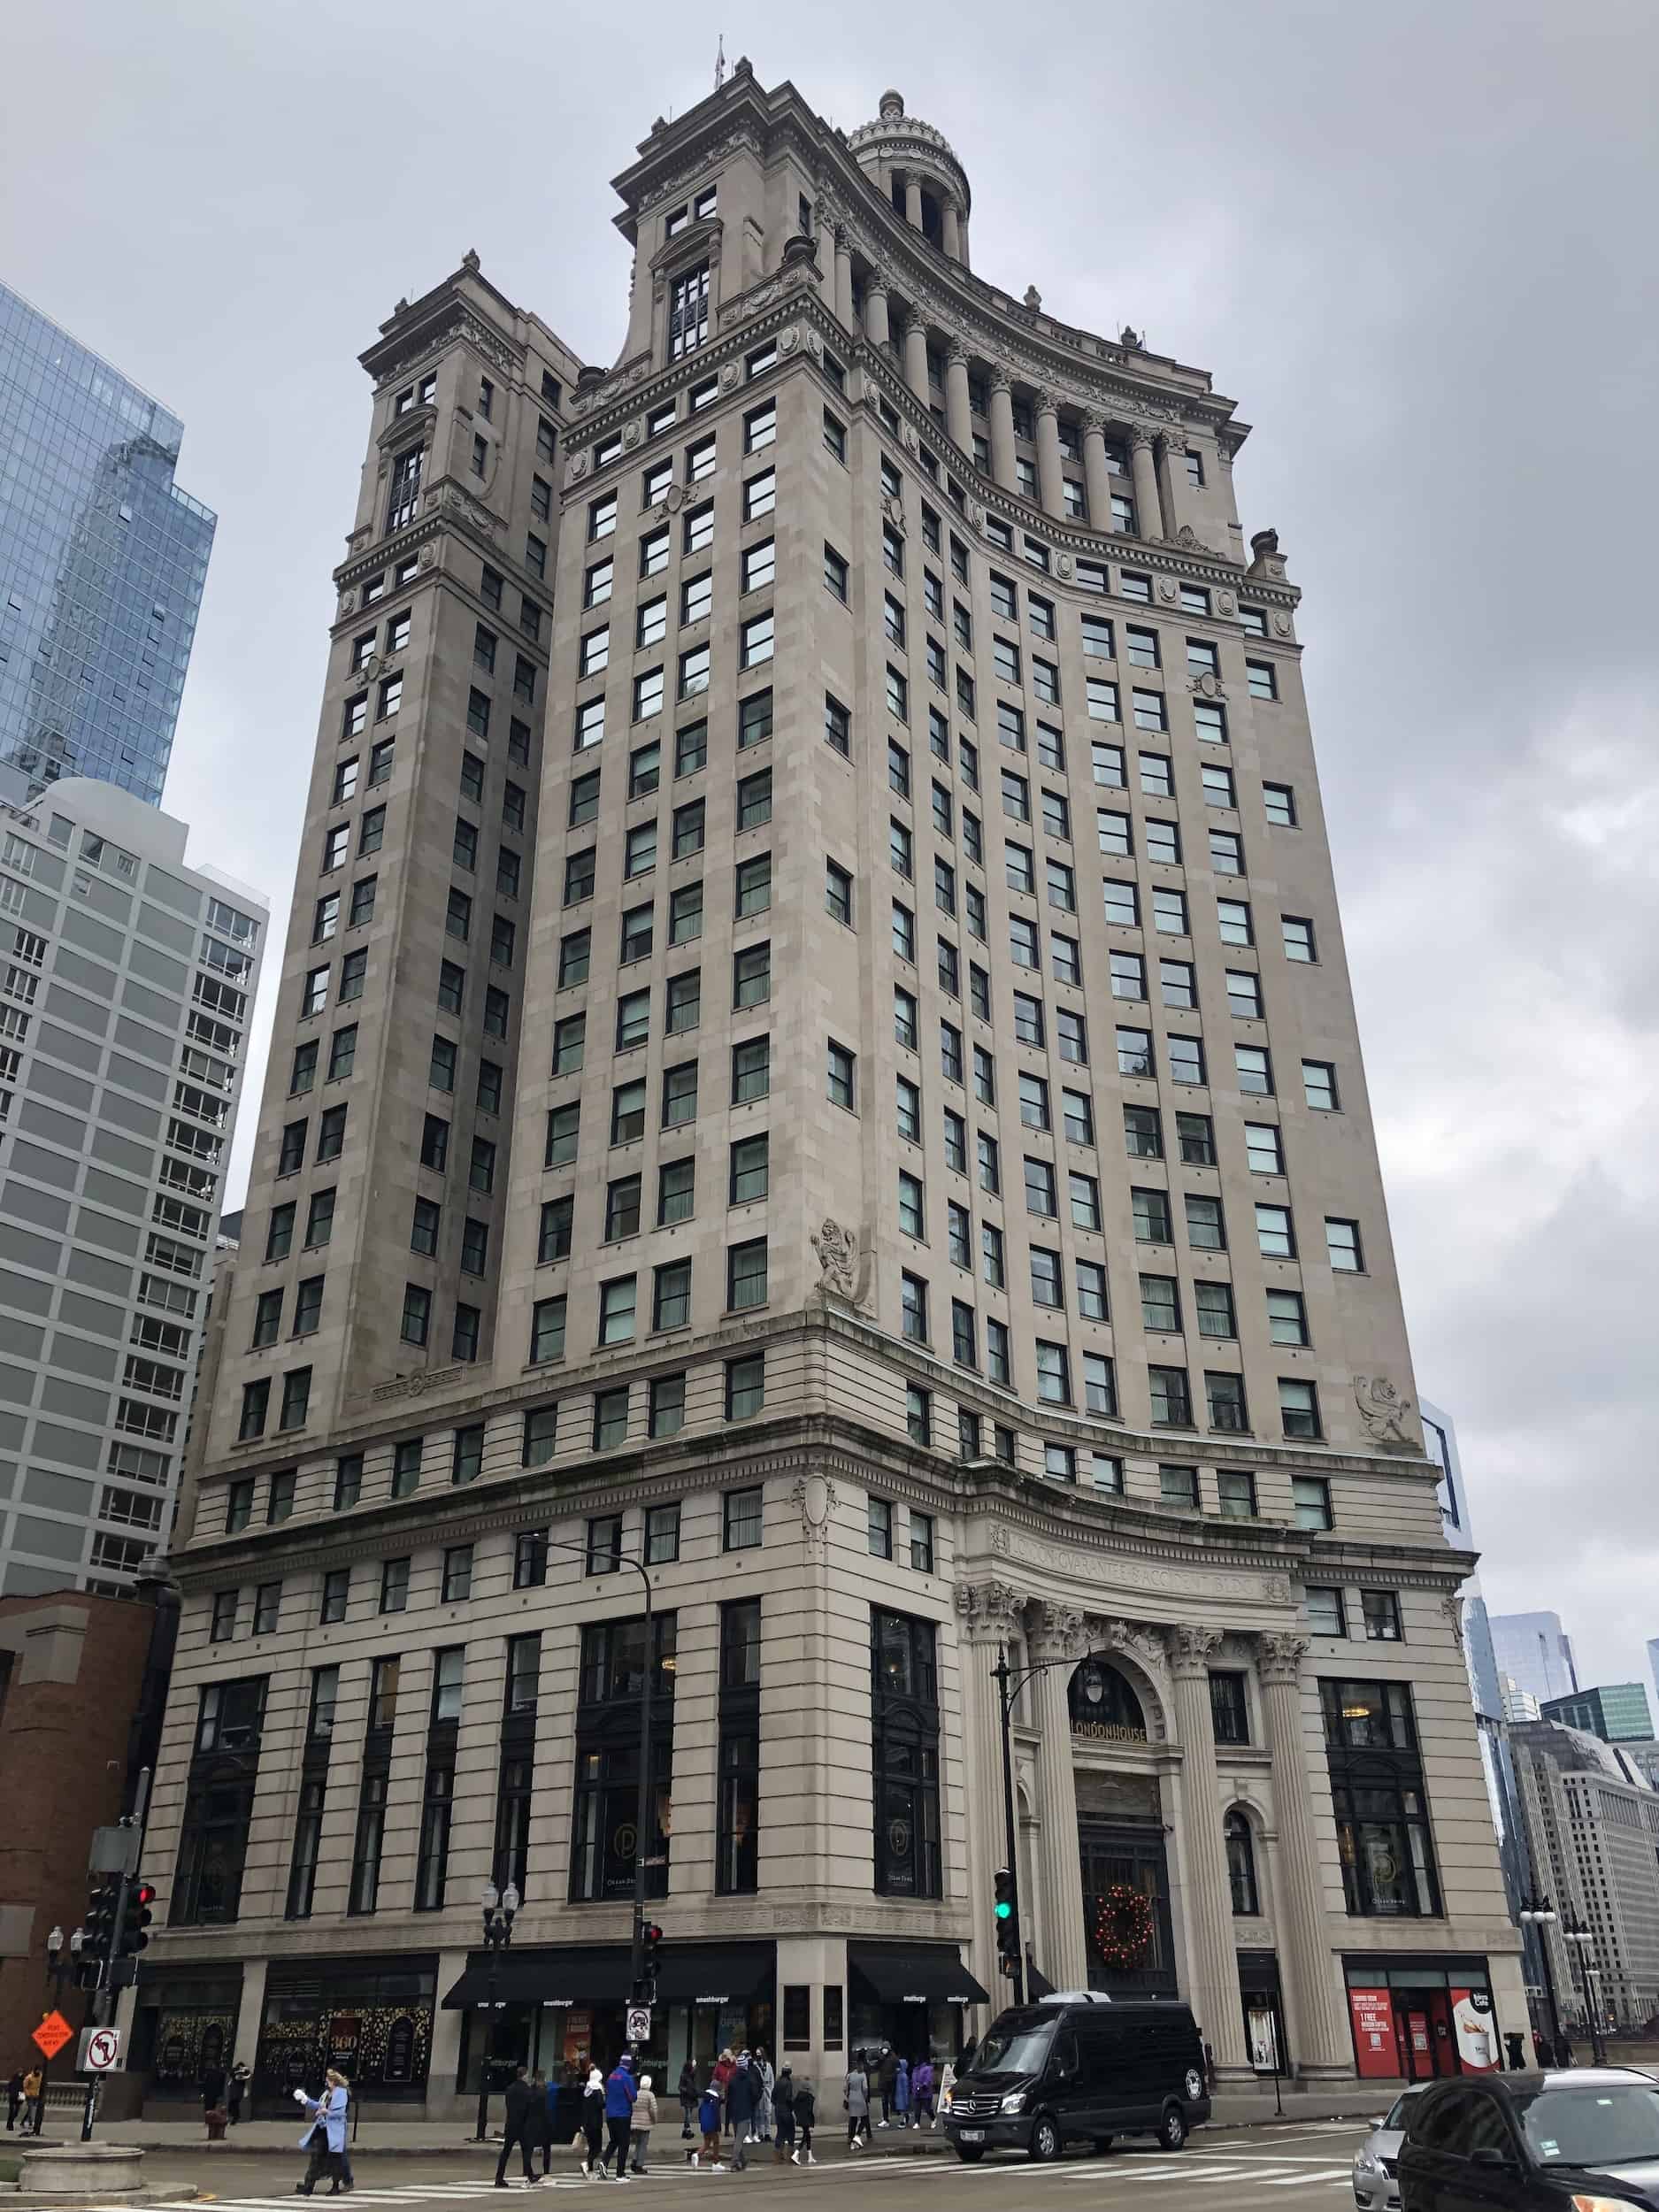 London Guarantee Building in Chicago, Illinois